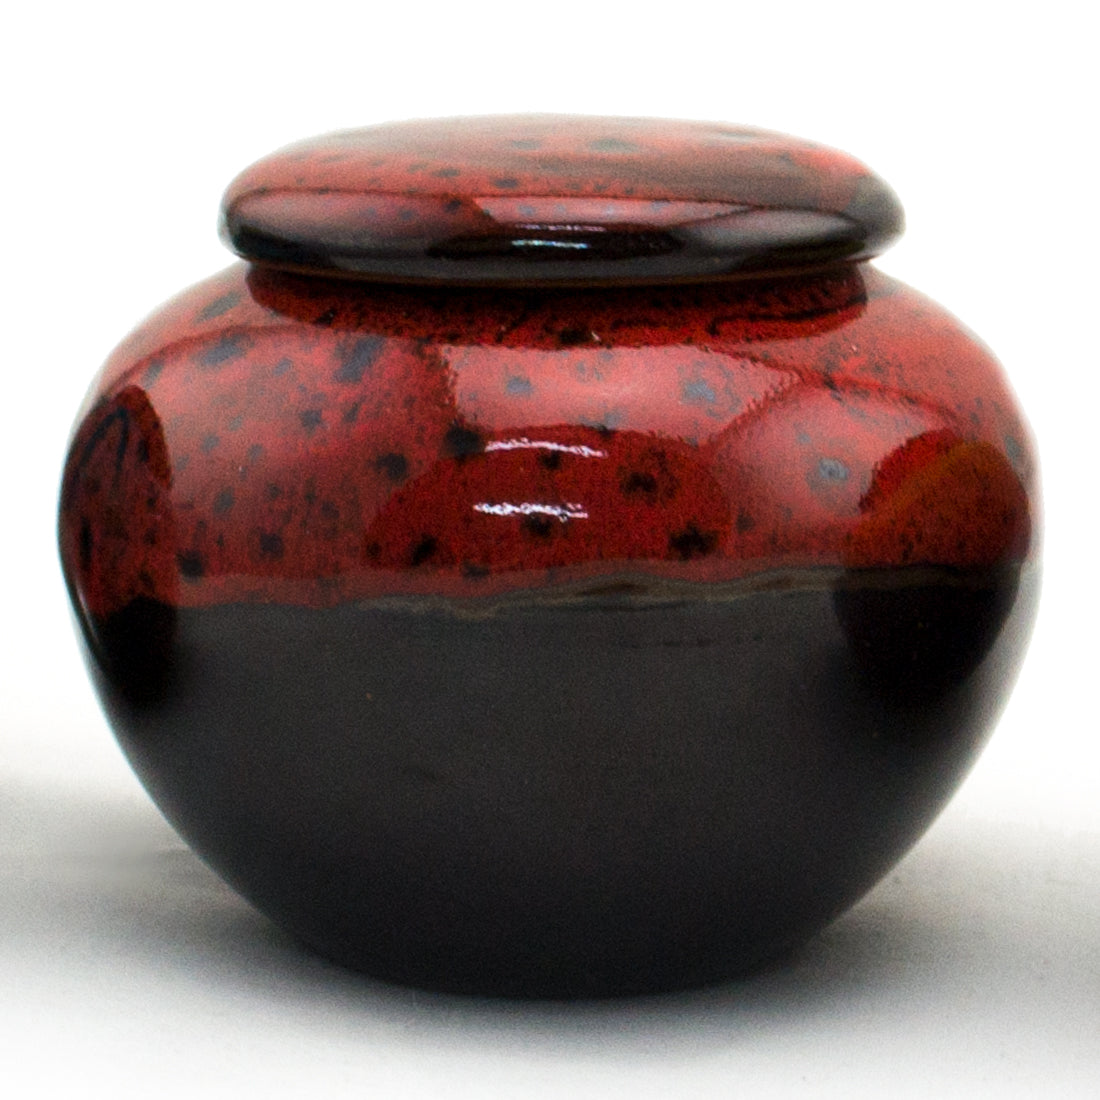 Tea Canister - Ceramic - Red - Original Source